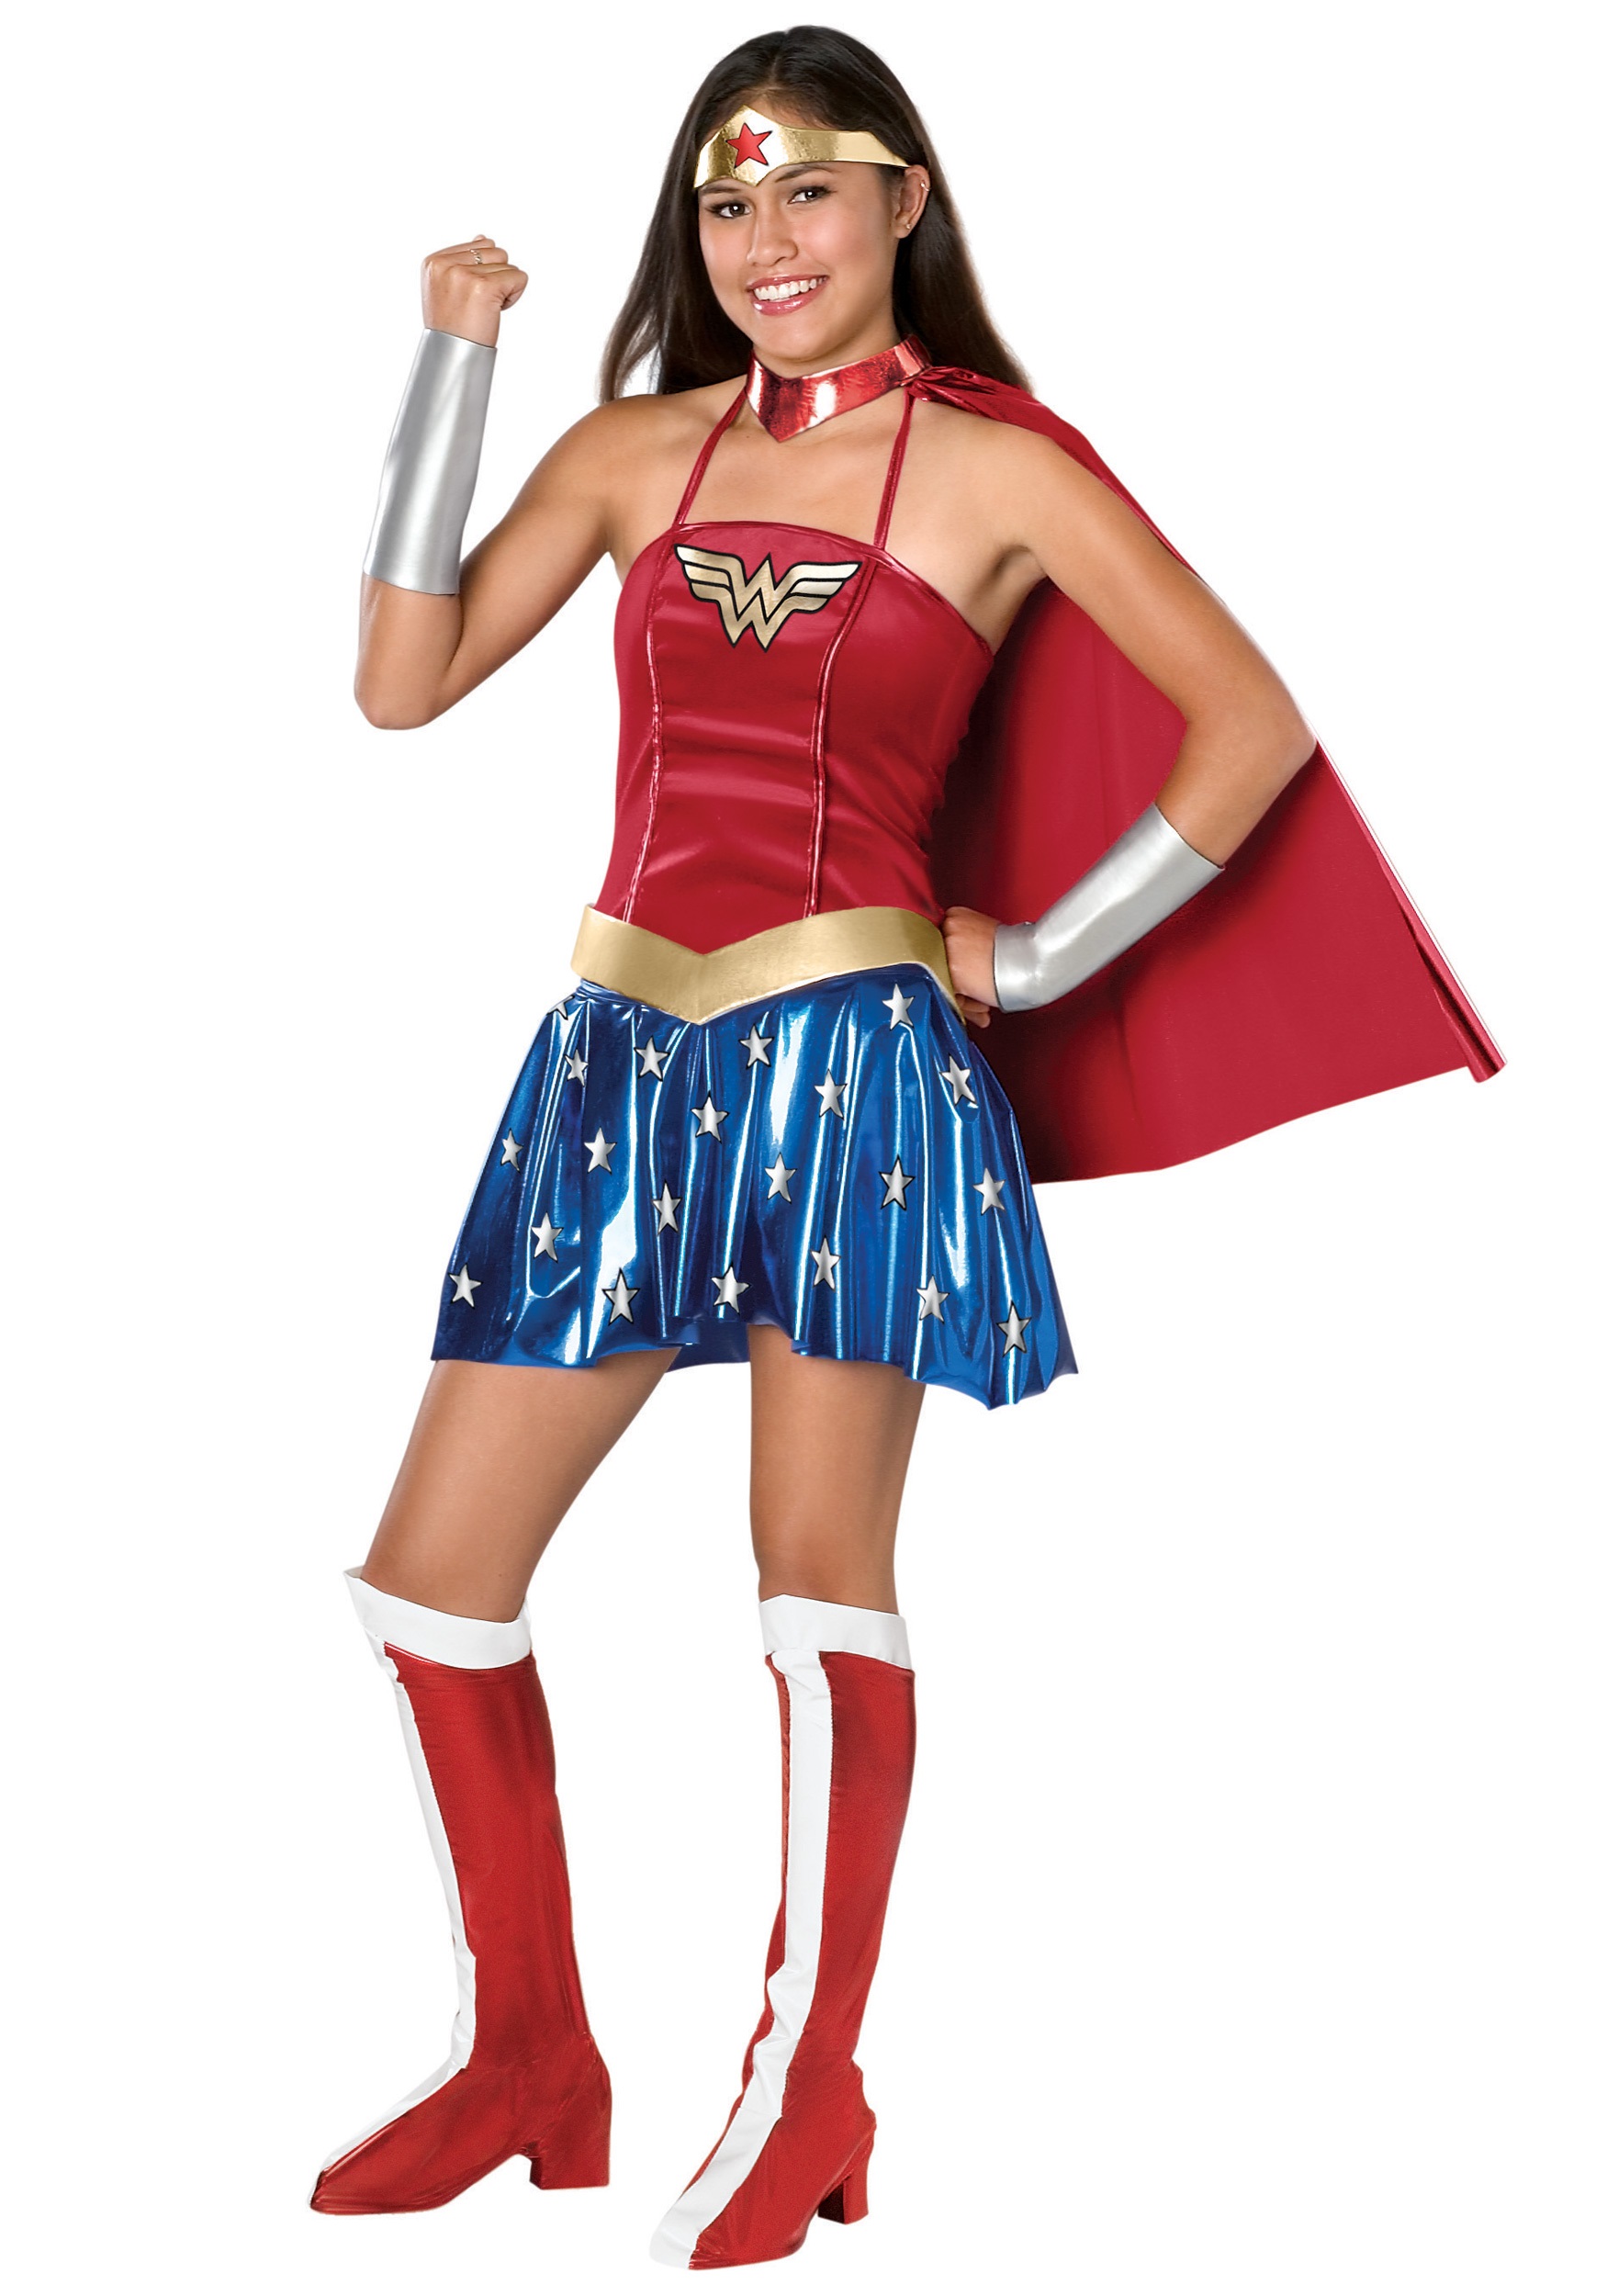 Image of Teen Wonder Woman Costume | Girl's Superhero Costume ID RU886023-TN